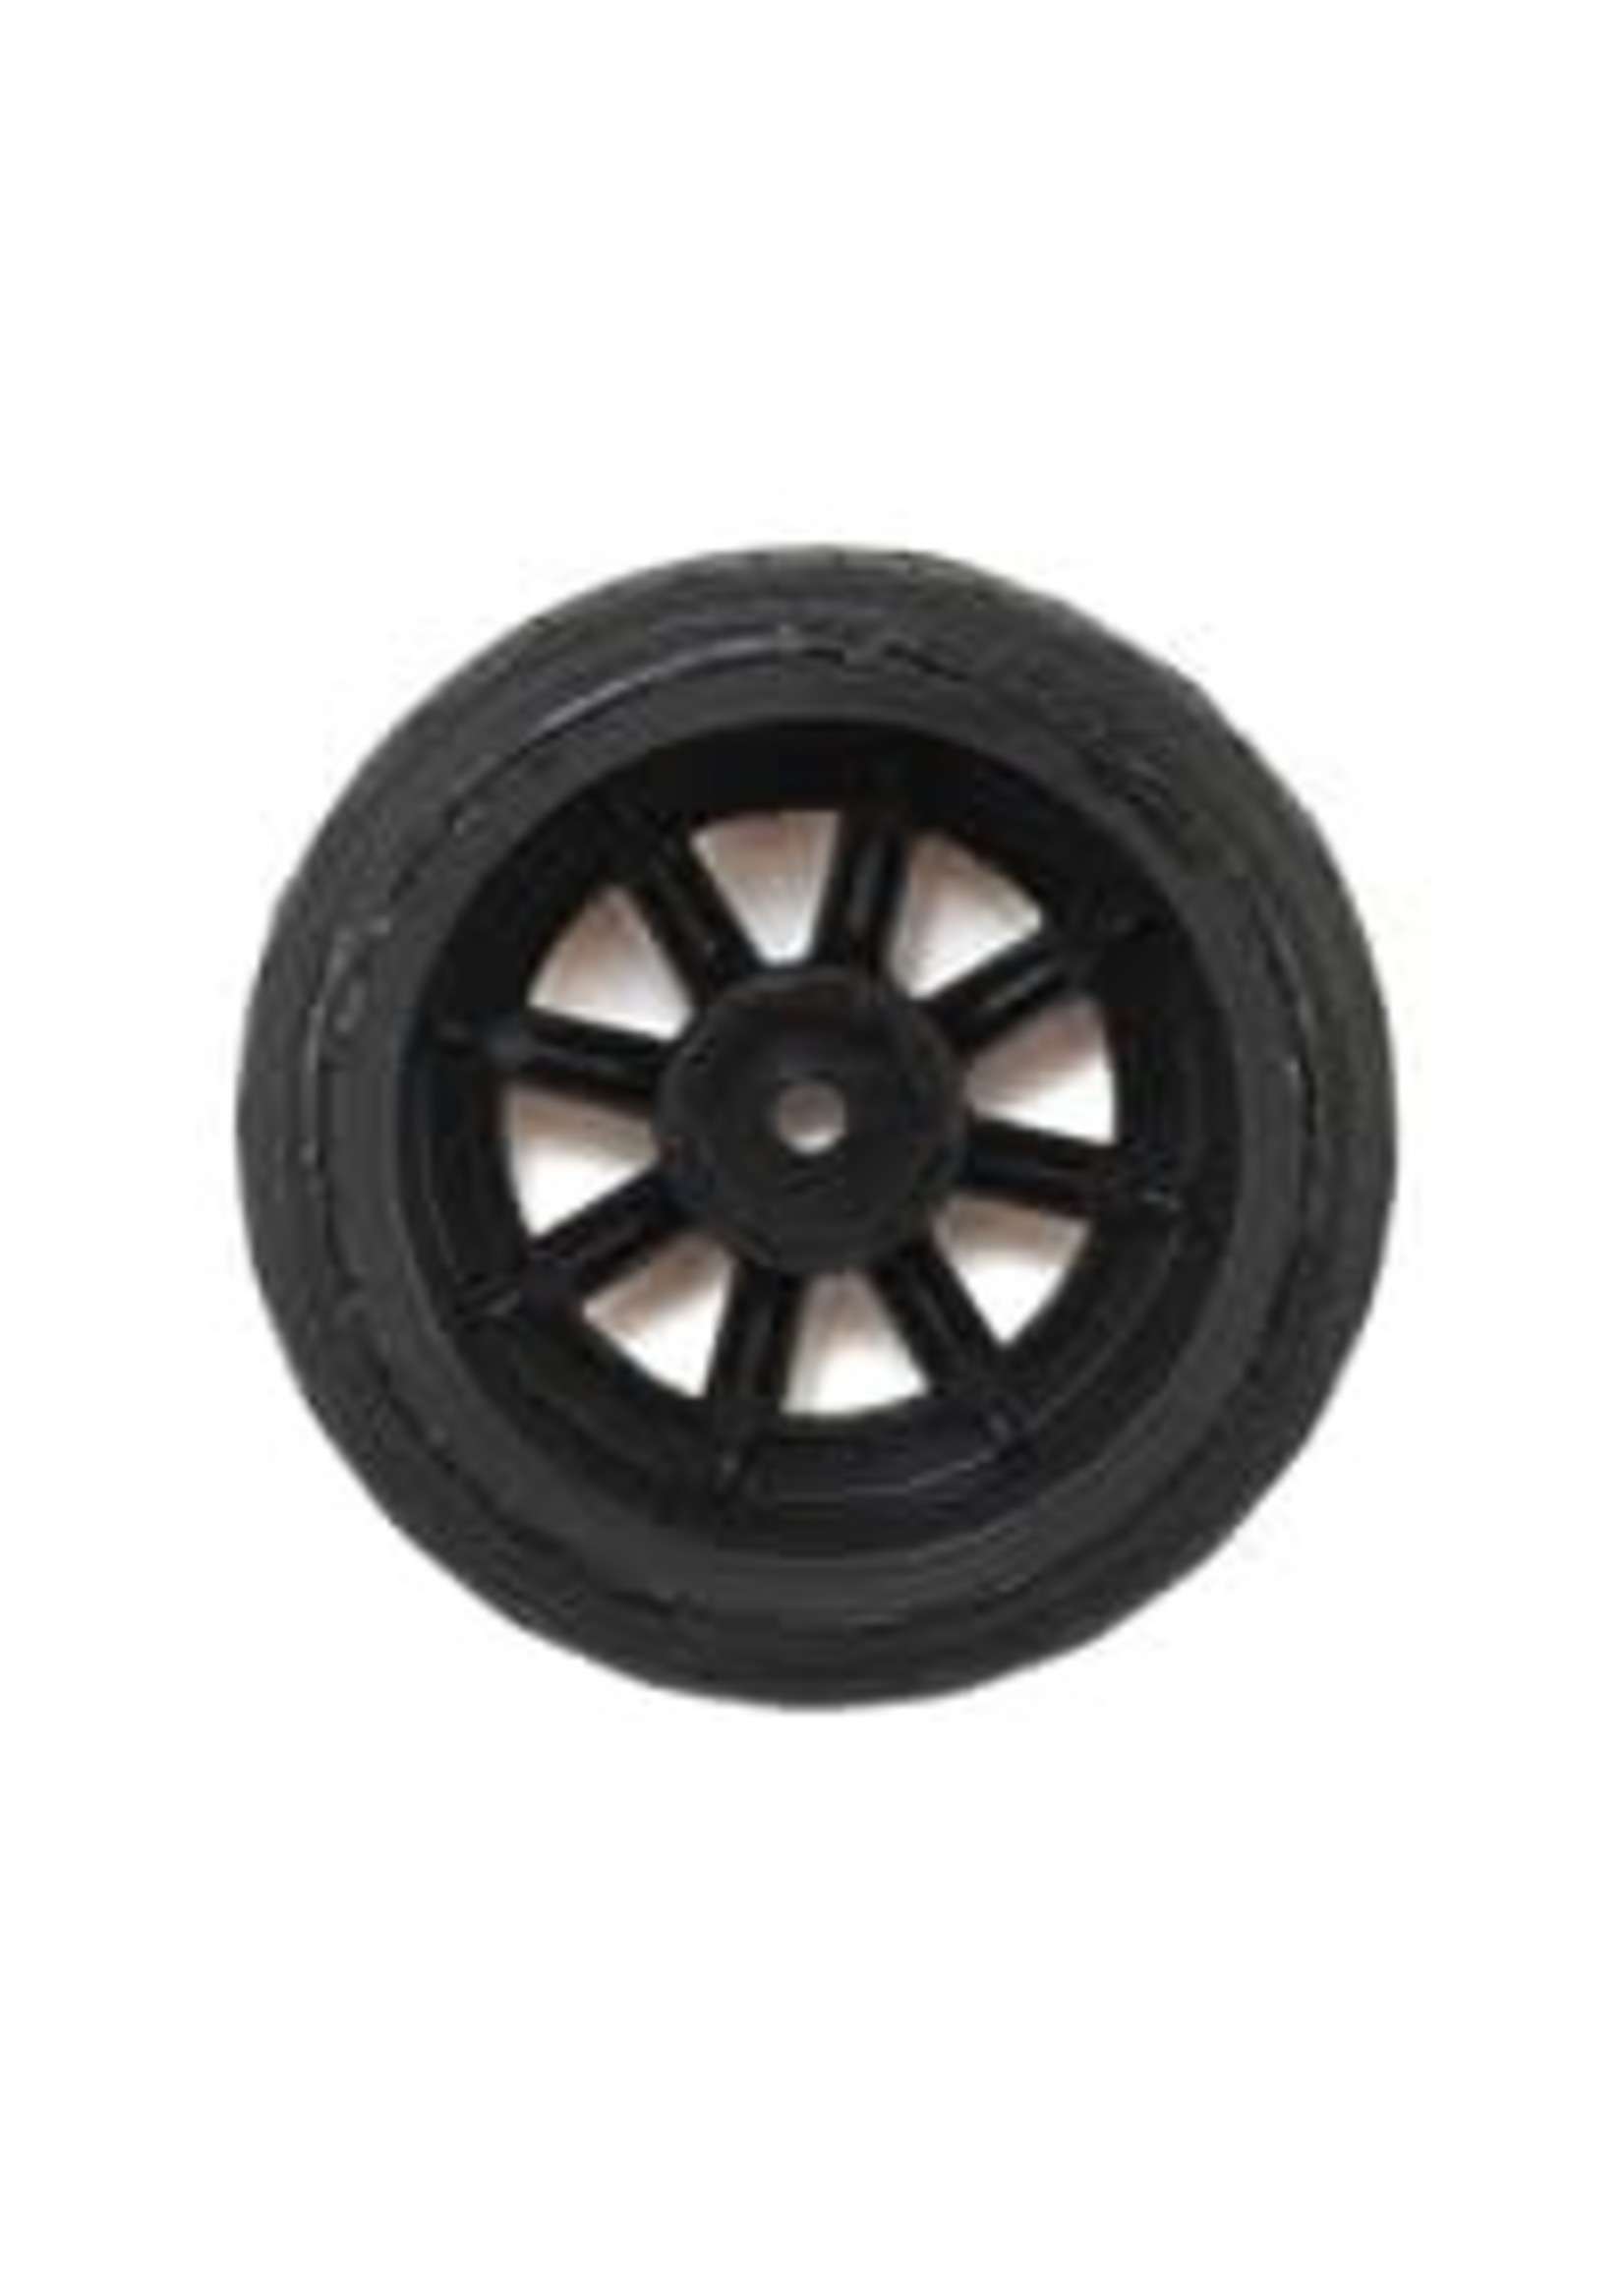 Protoform PRM1014018 VTA Front Tire 26mm, Mounted Black Wheel